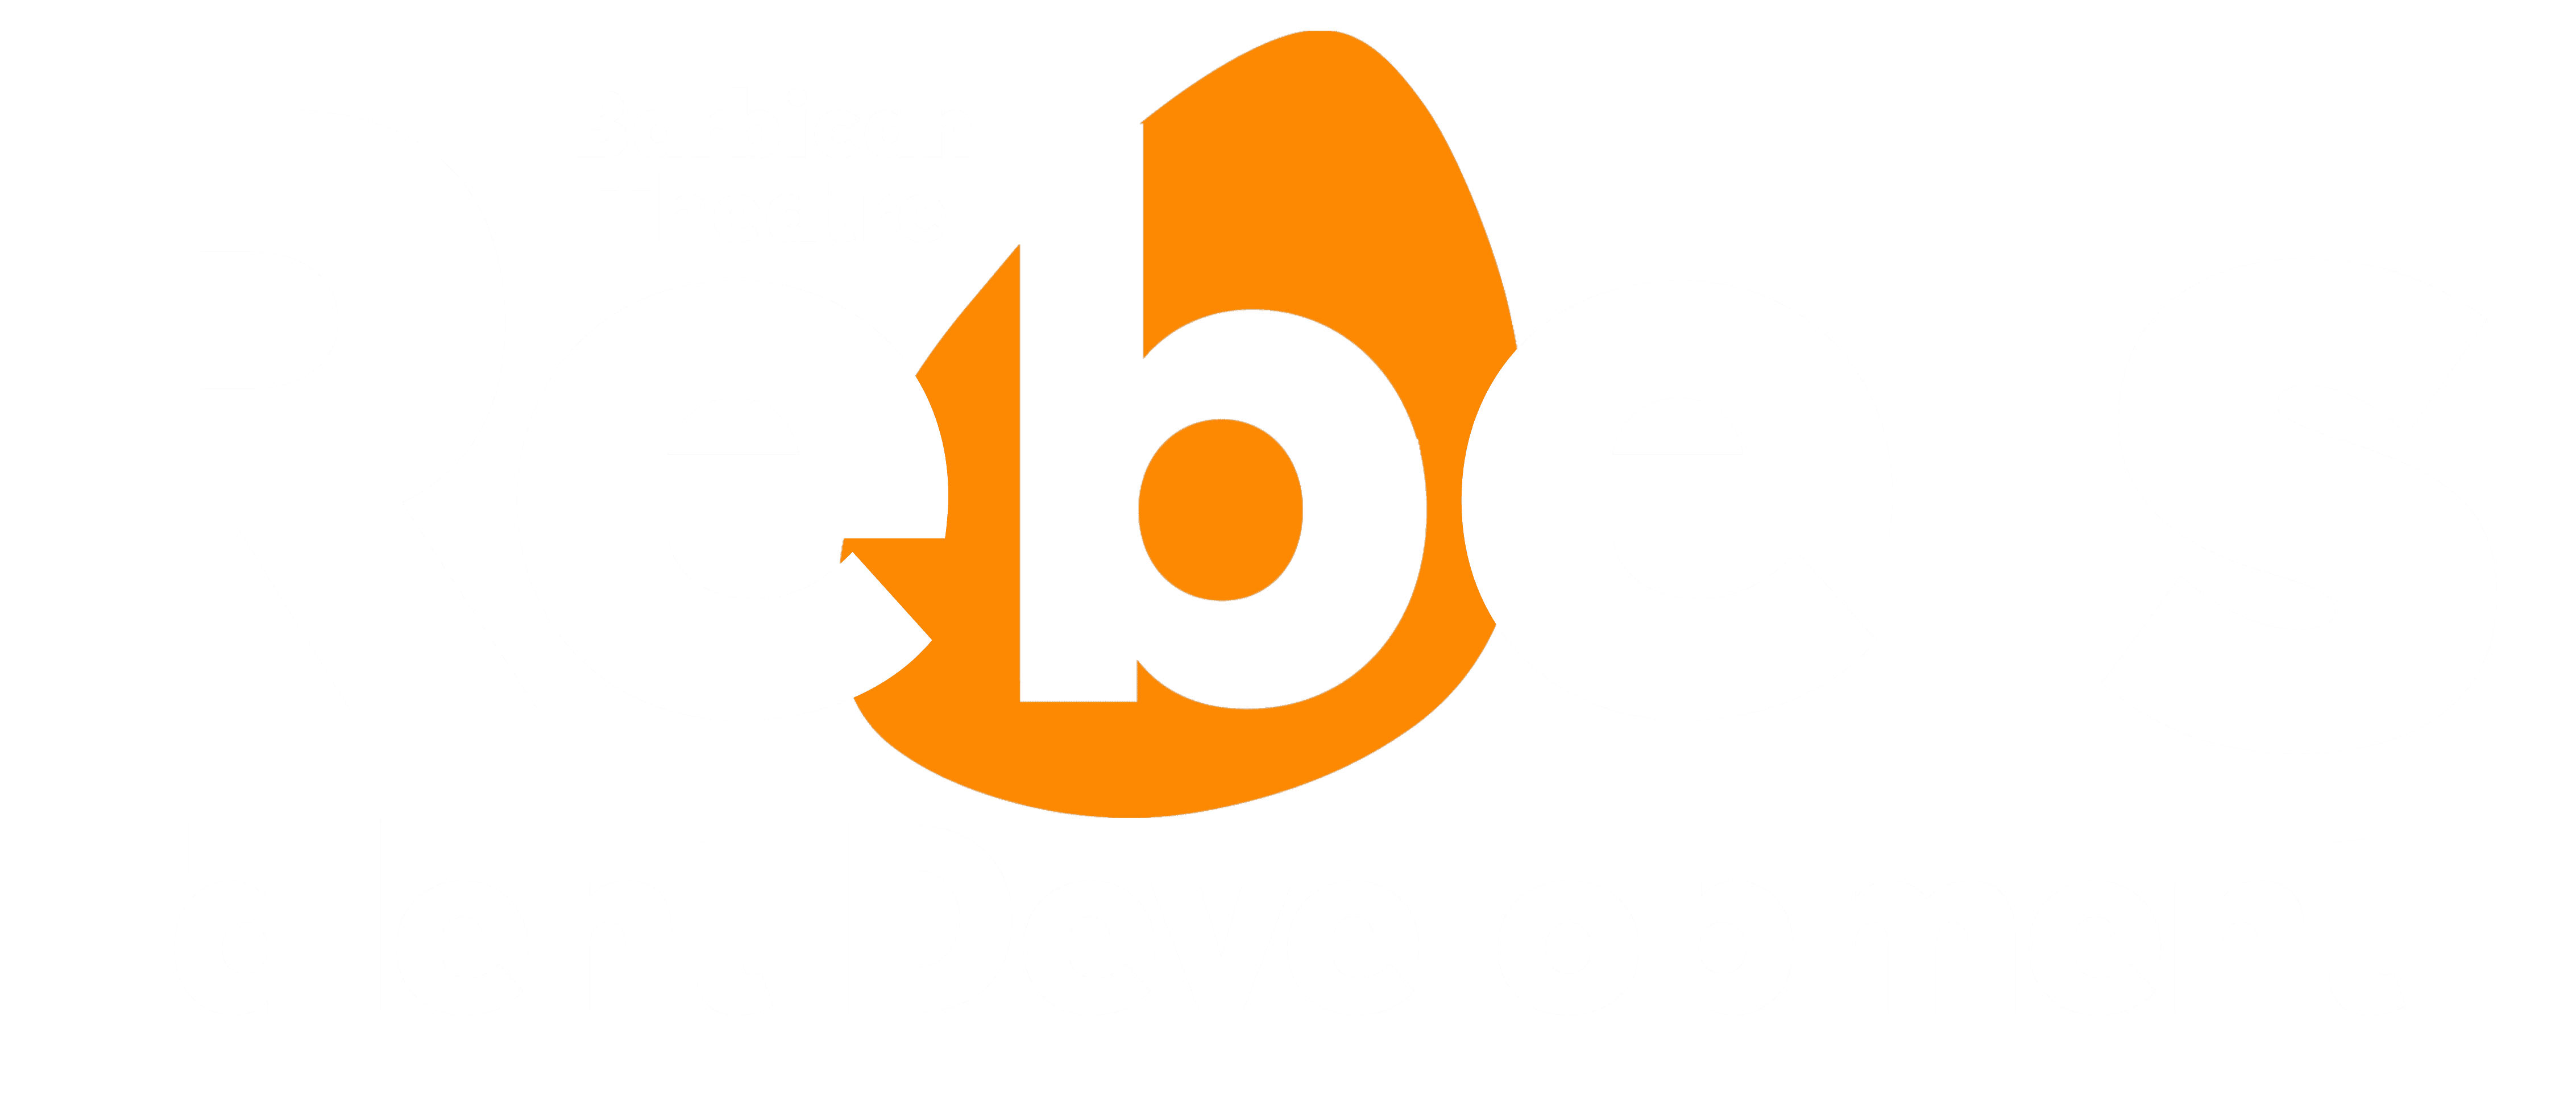 ReBels-Talent-Development-logo